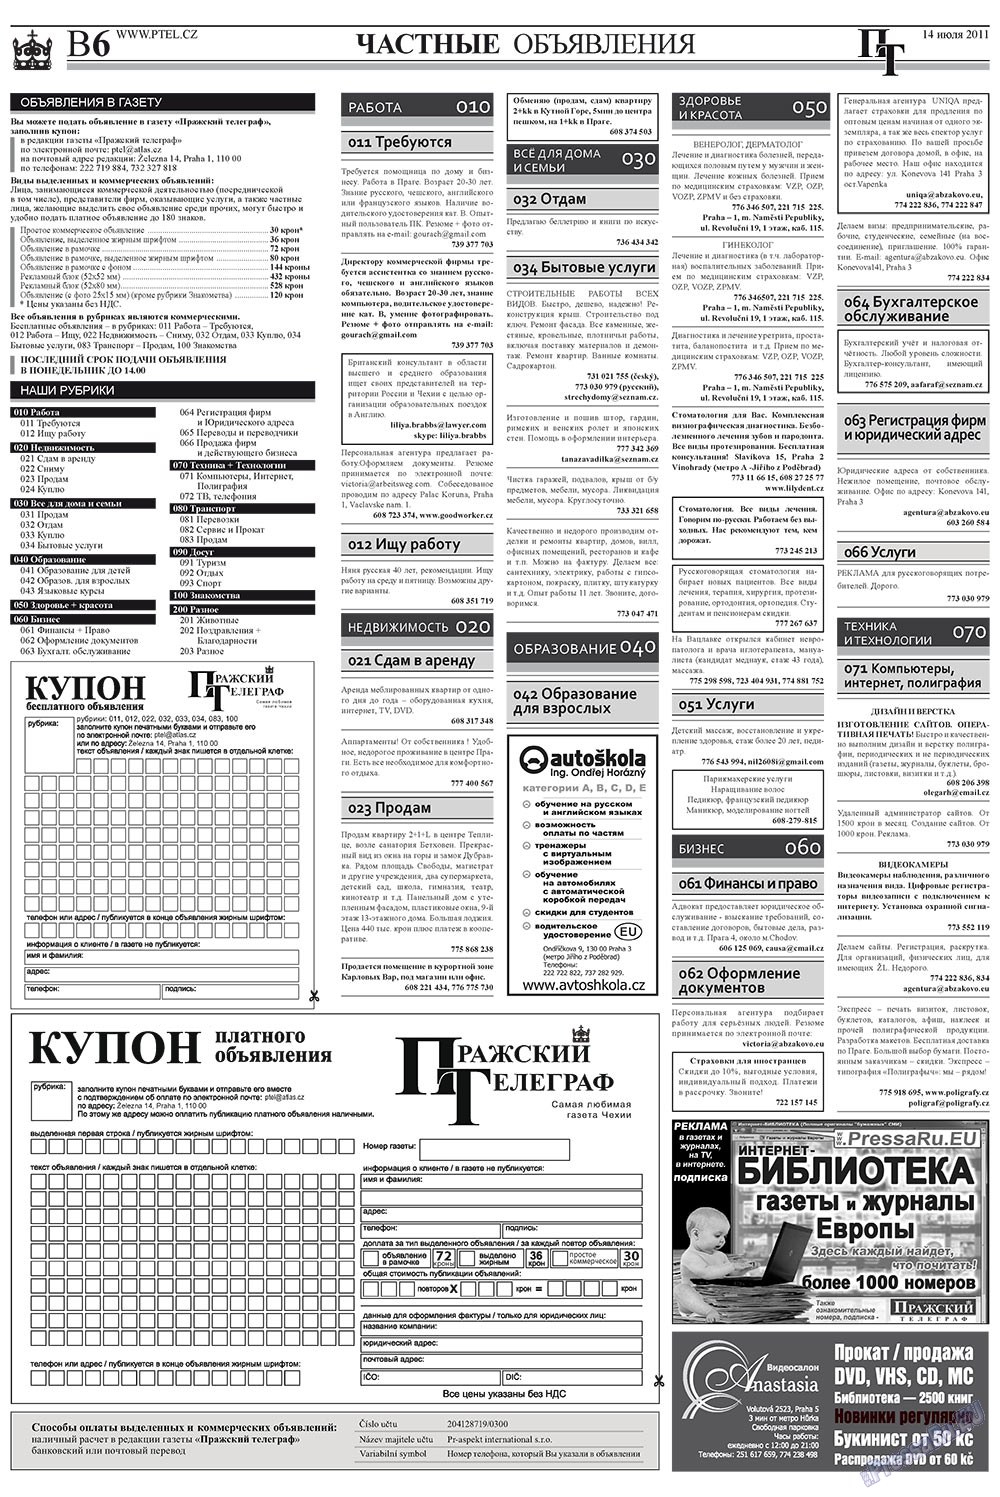 Пражский телеграф, газета. 2011 №28 стр.14